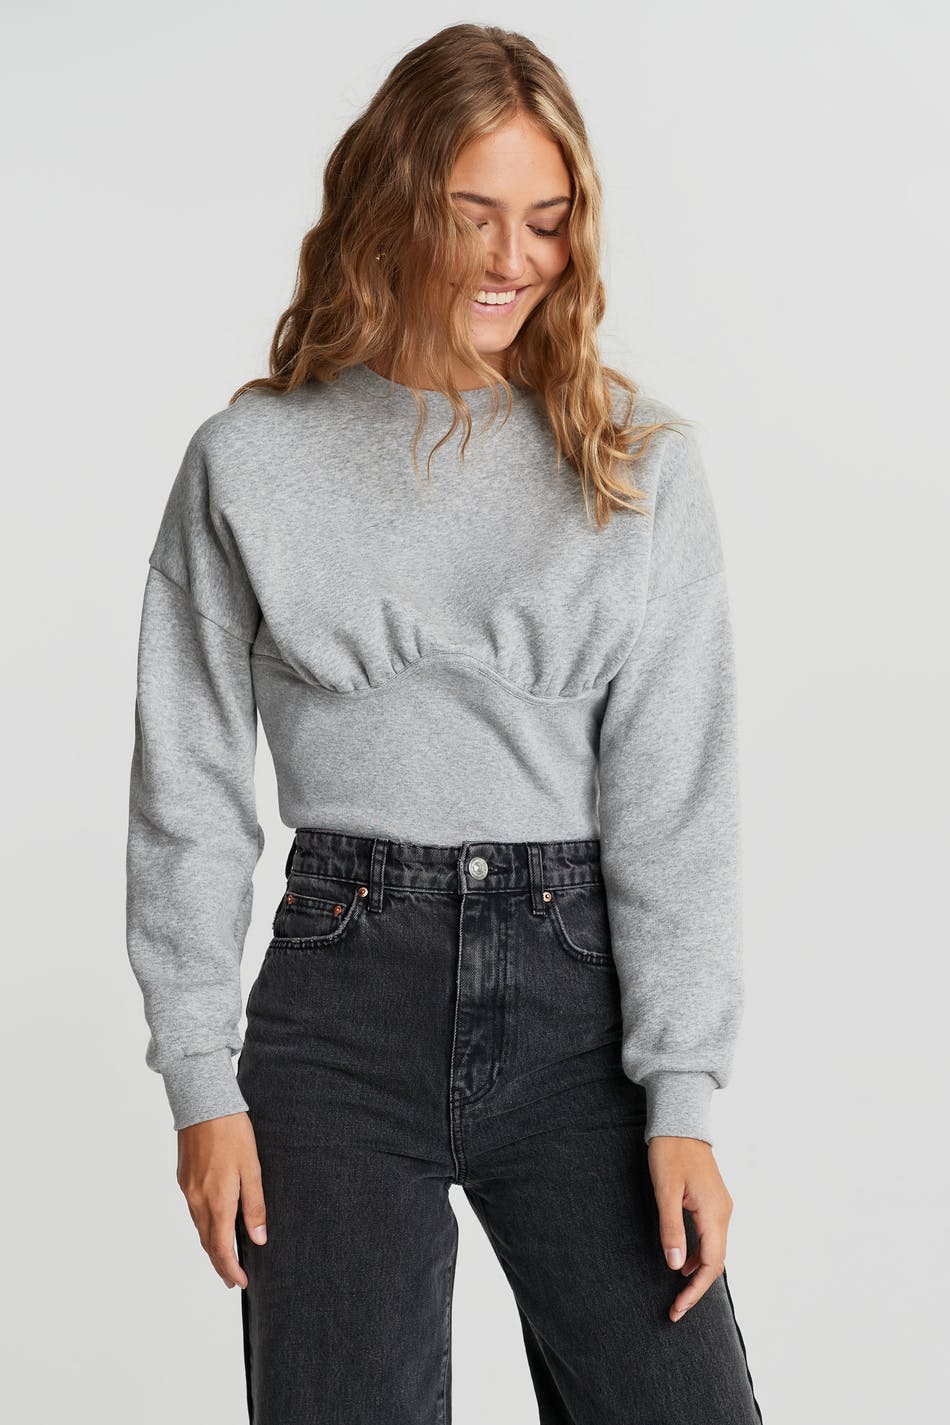 Gwen sweater